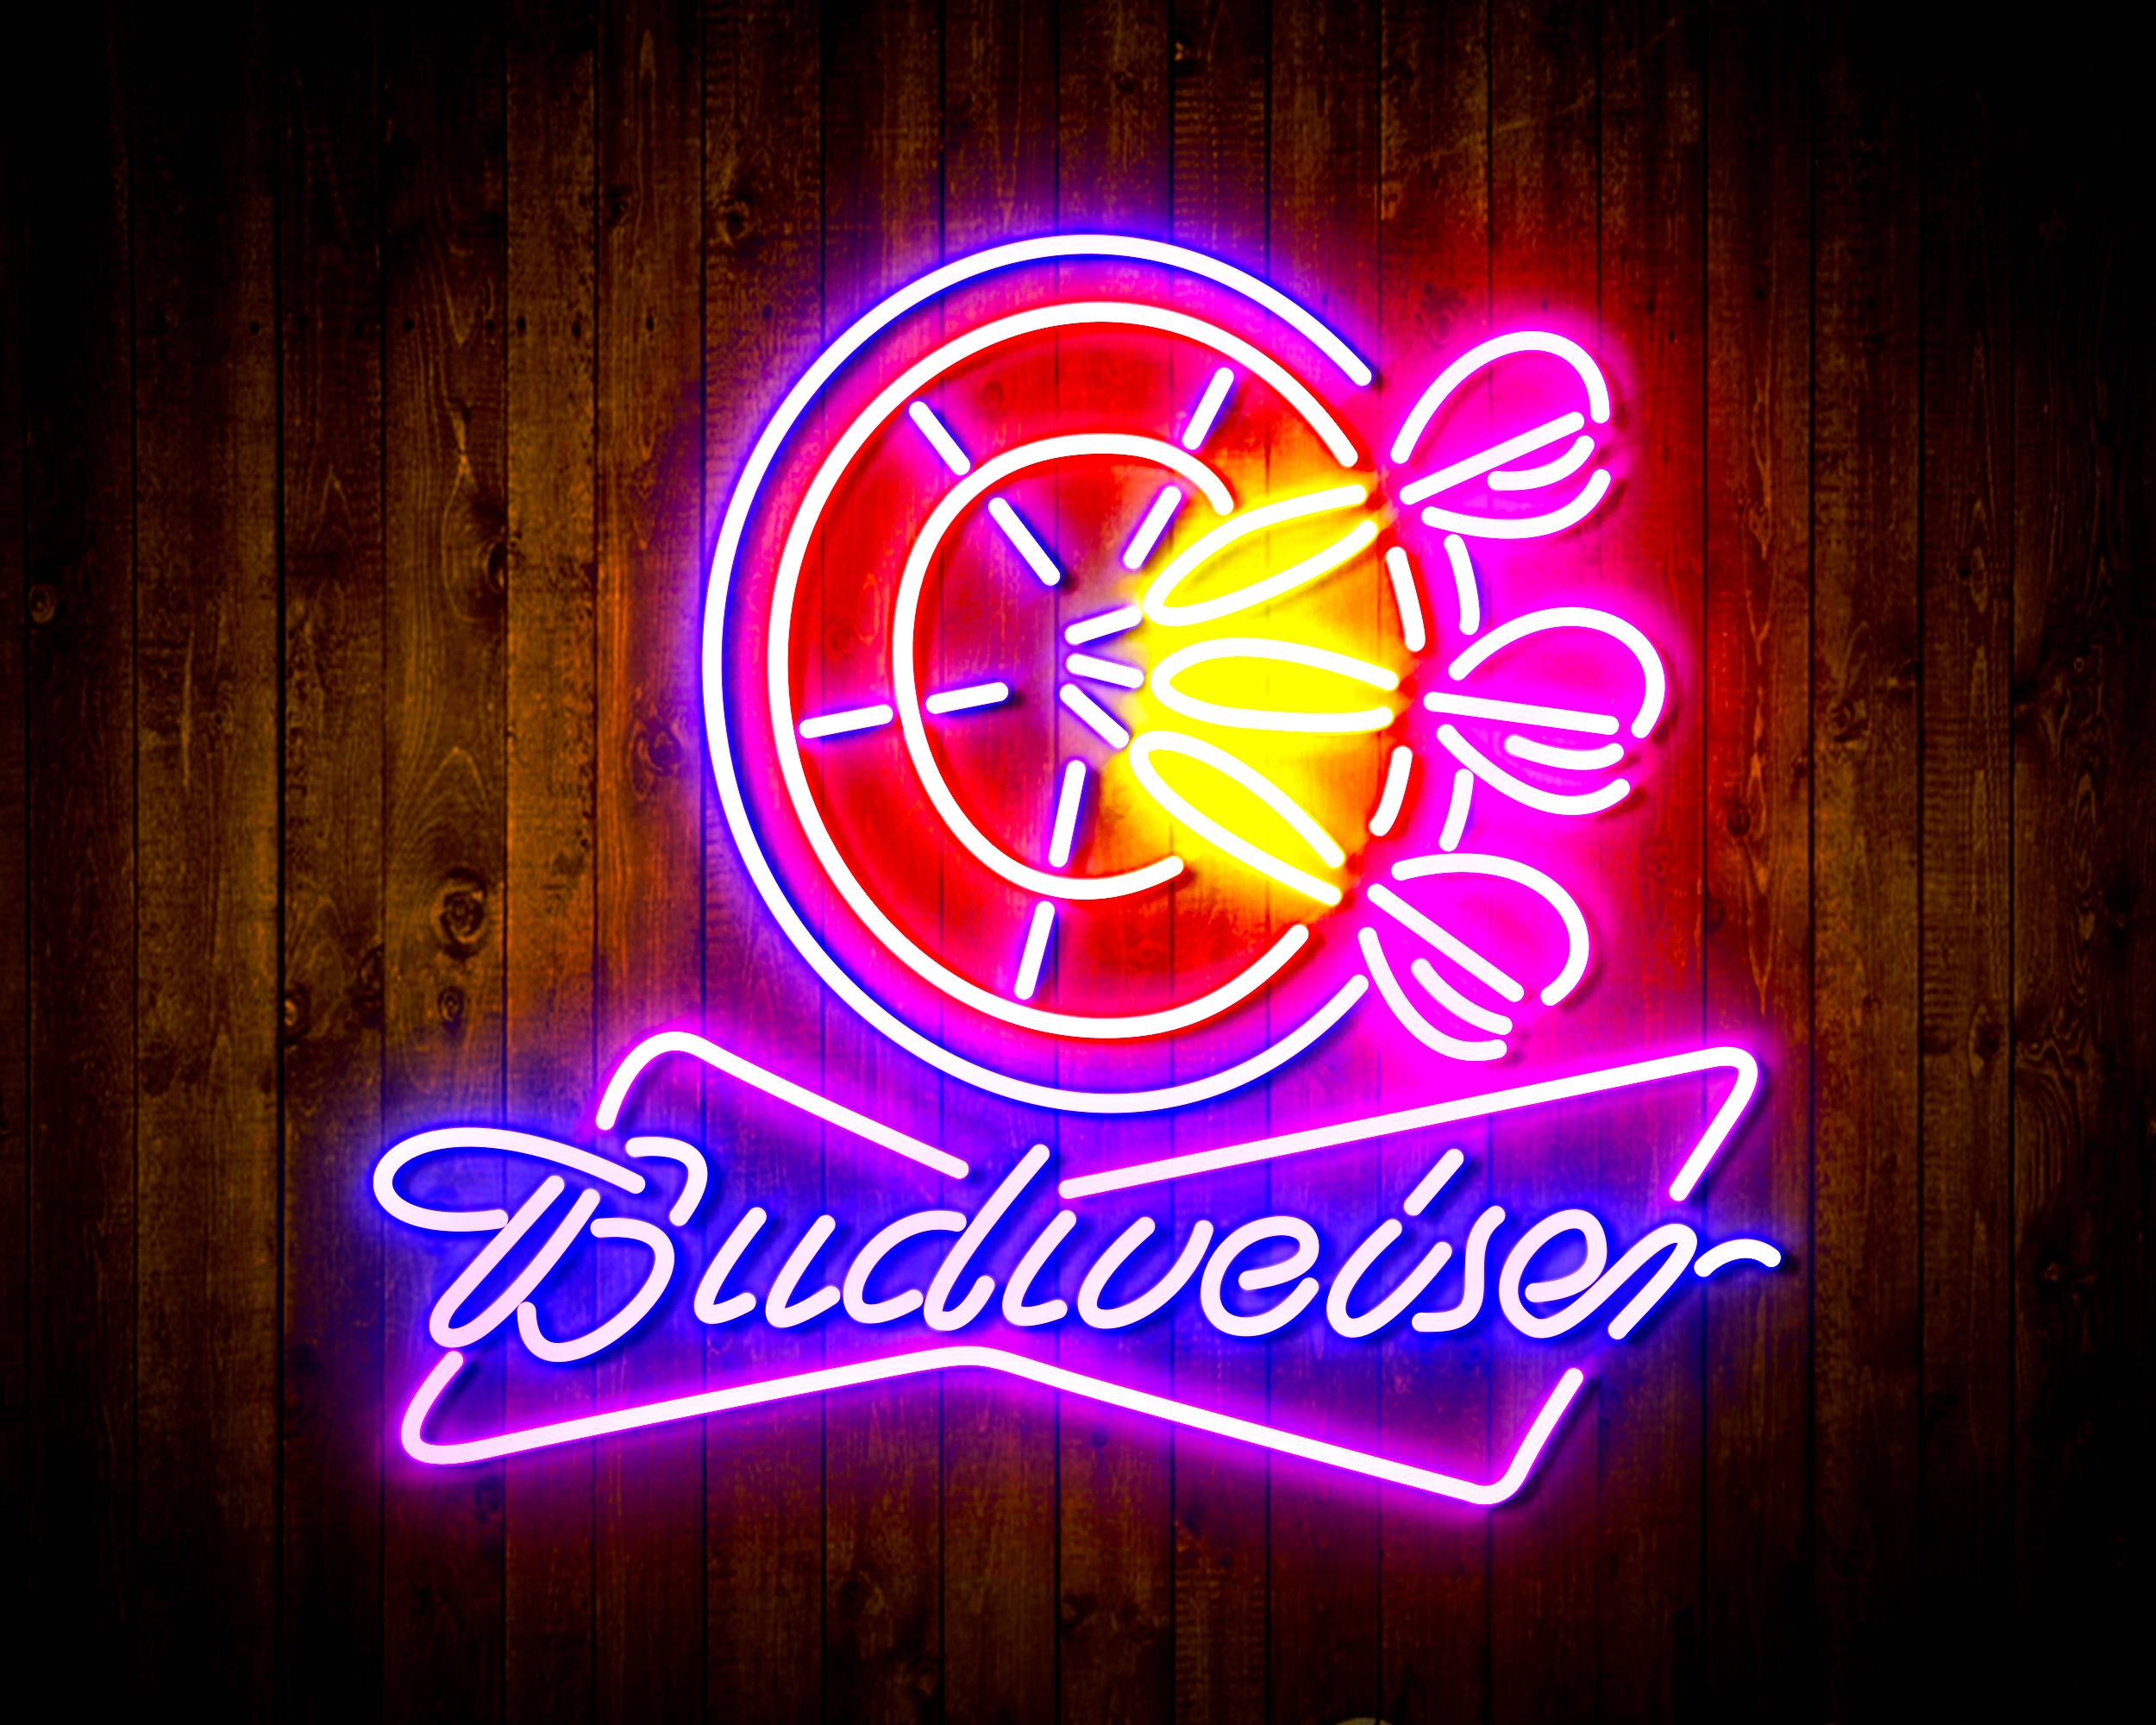 Budweiser with Dart Board Handmade LED Neon Light Sign